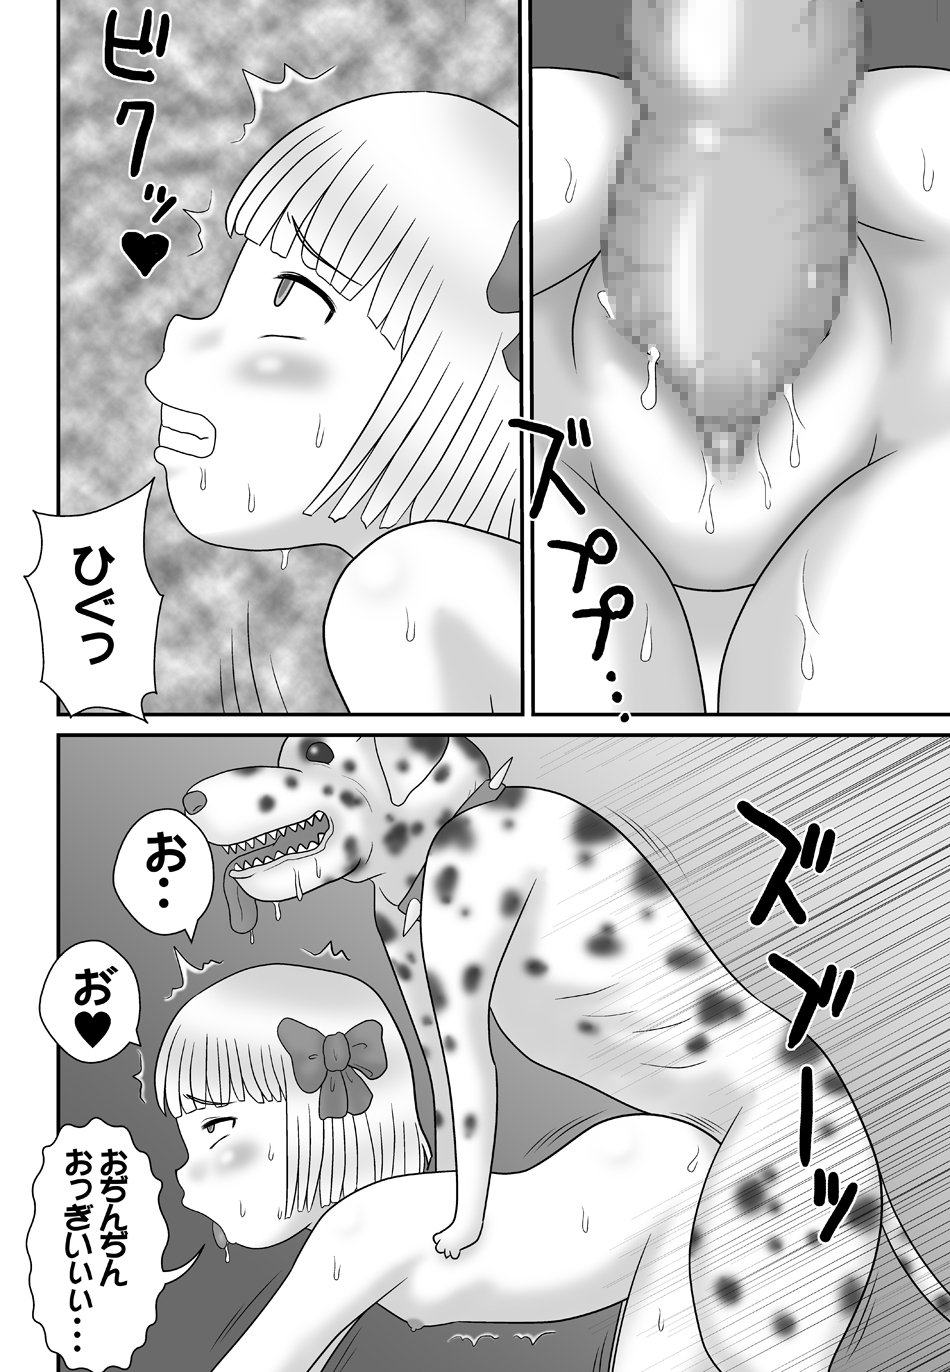 Beastality manga